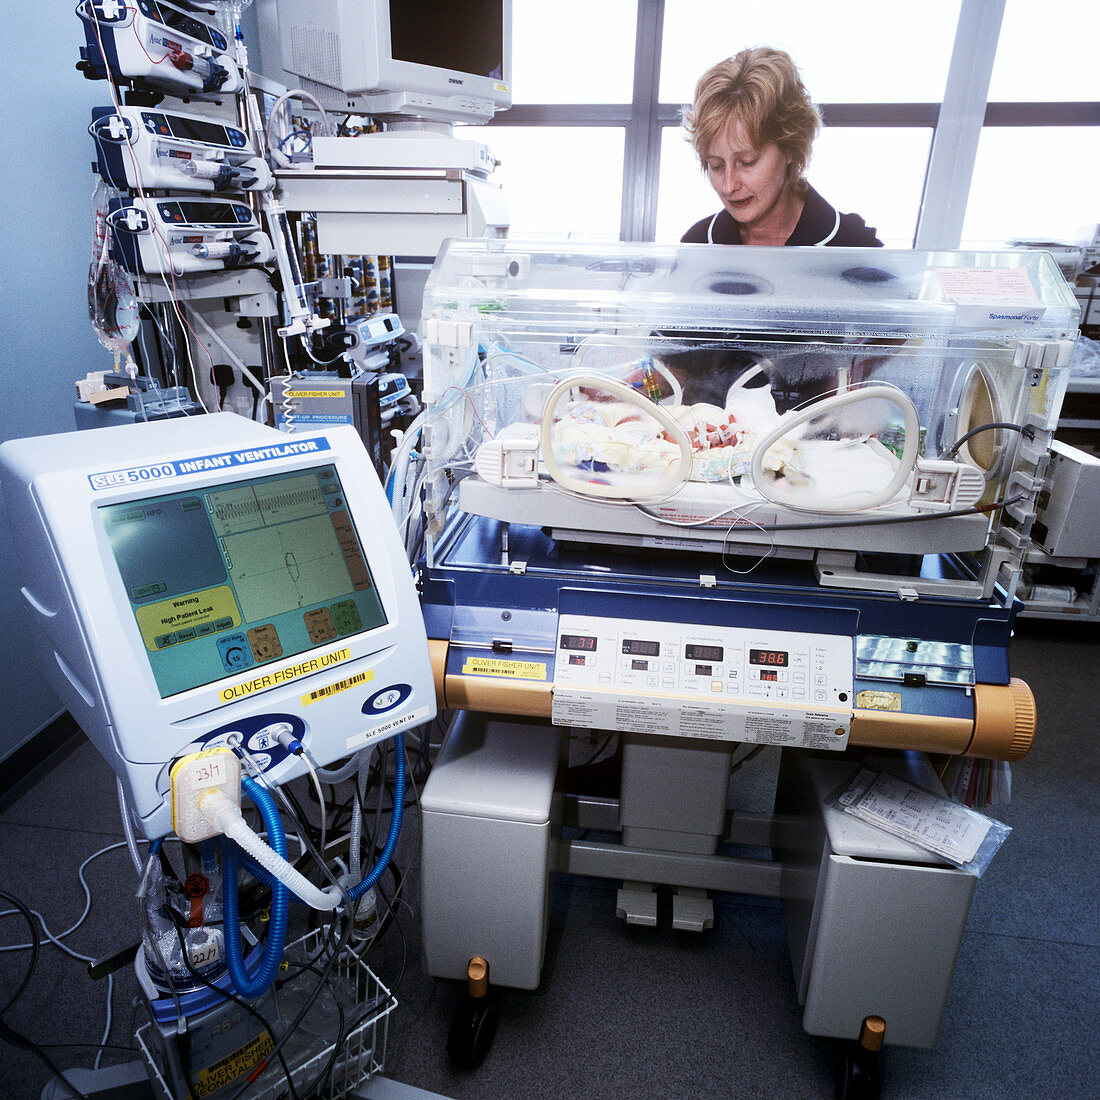 Ventilator for premature baby